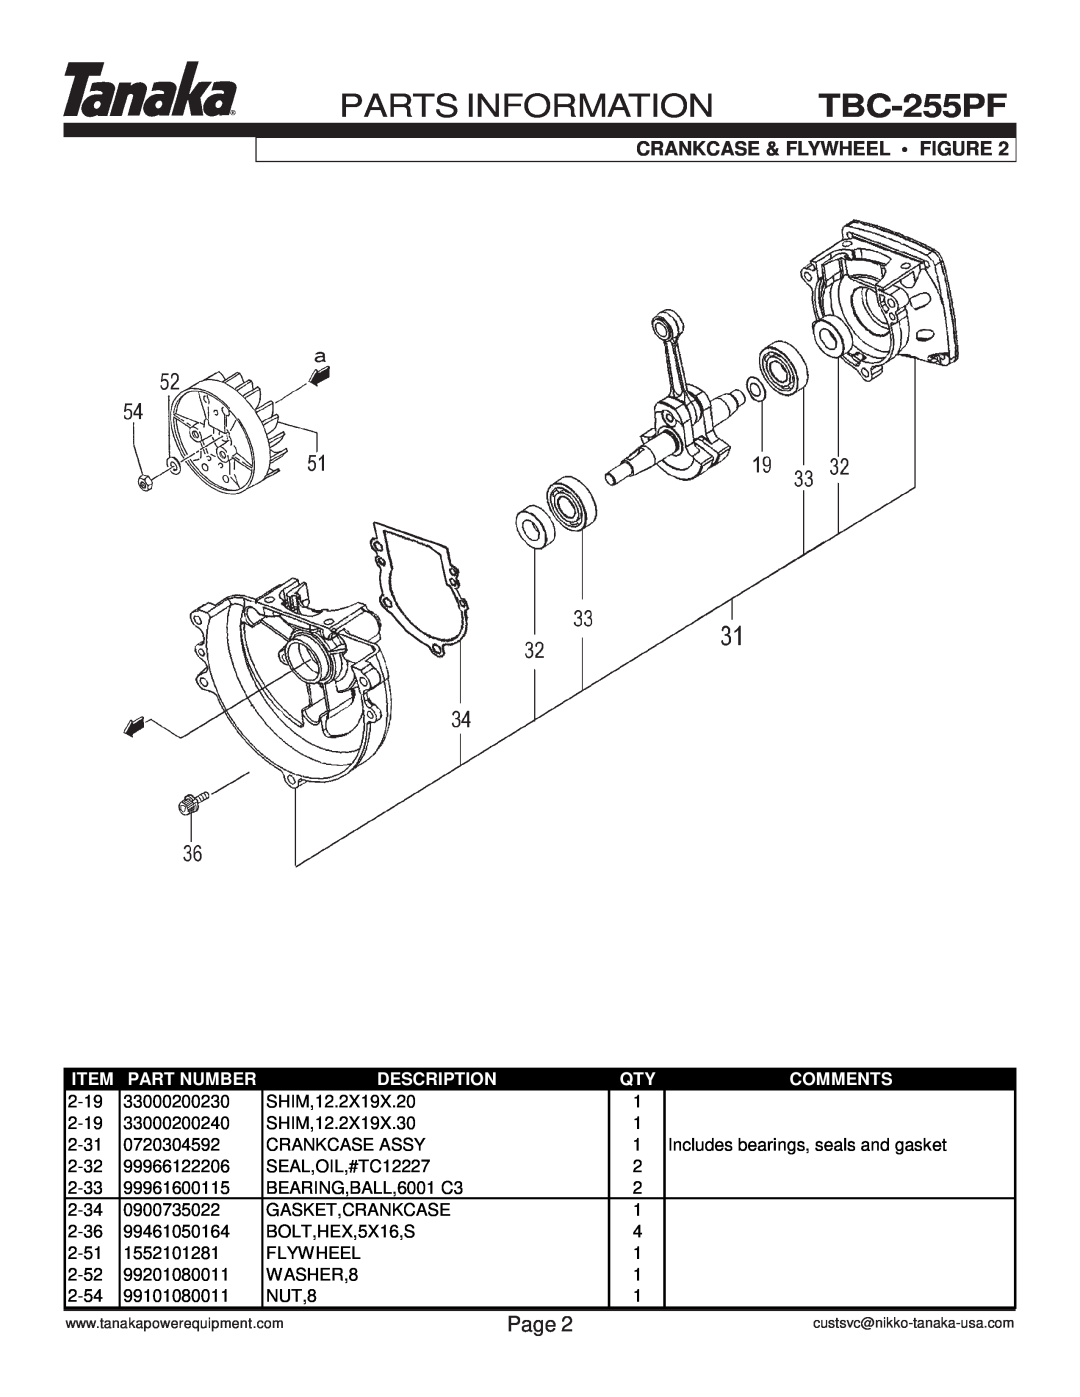 Tanaka manual PARTS INFORMATION TBC-255PF, Crankcase & Flywheel Figure, Page, Part Number, Description, Comments 